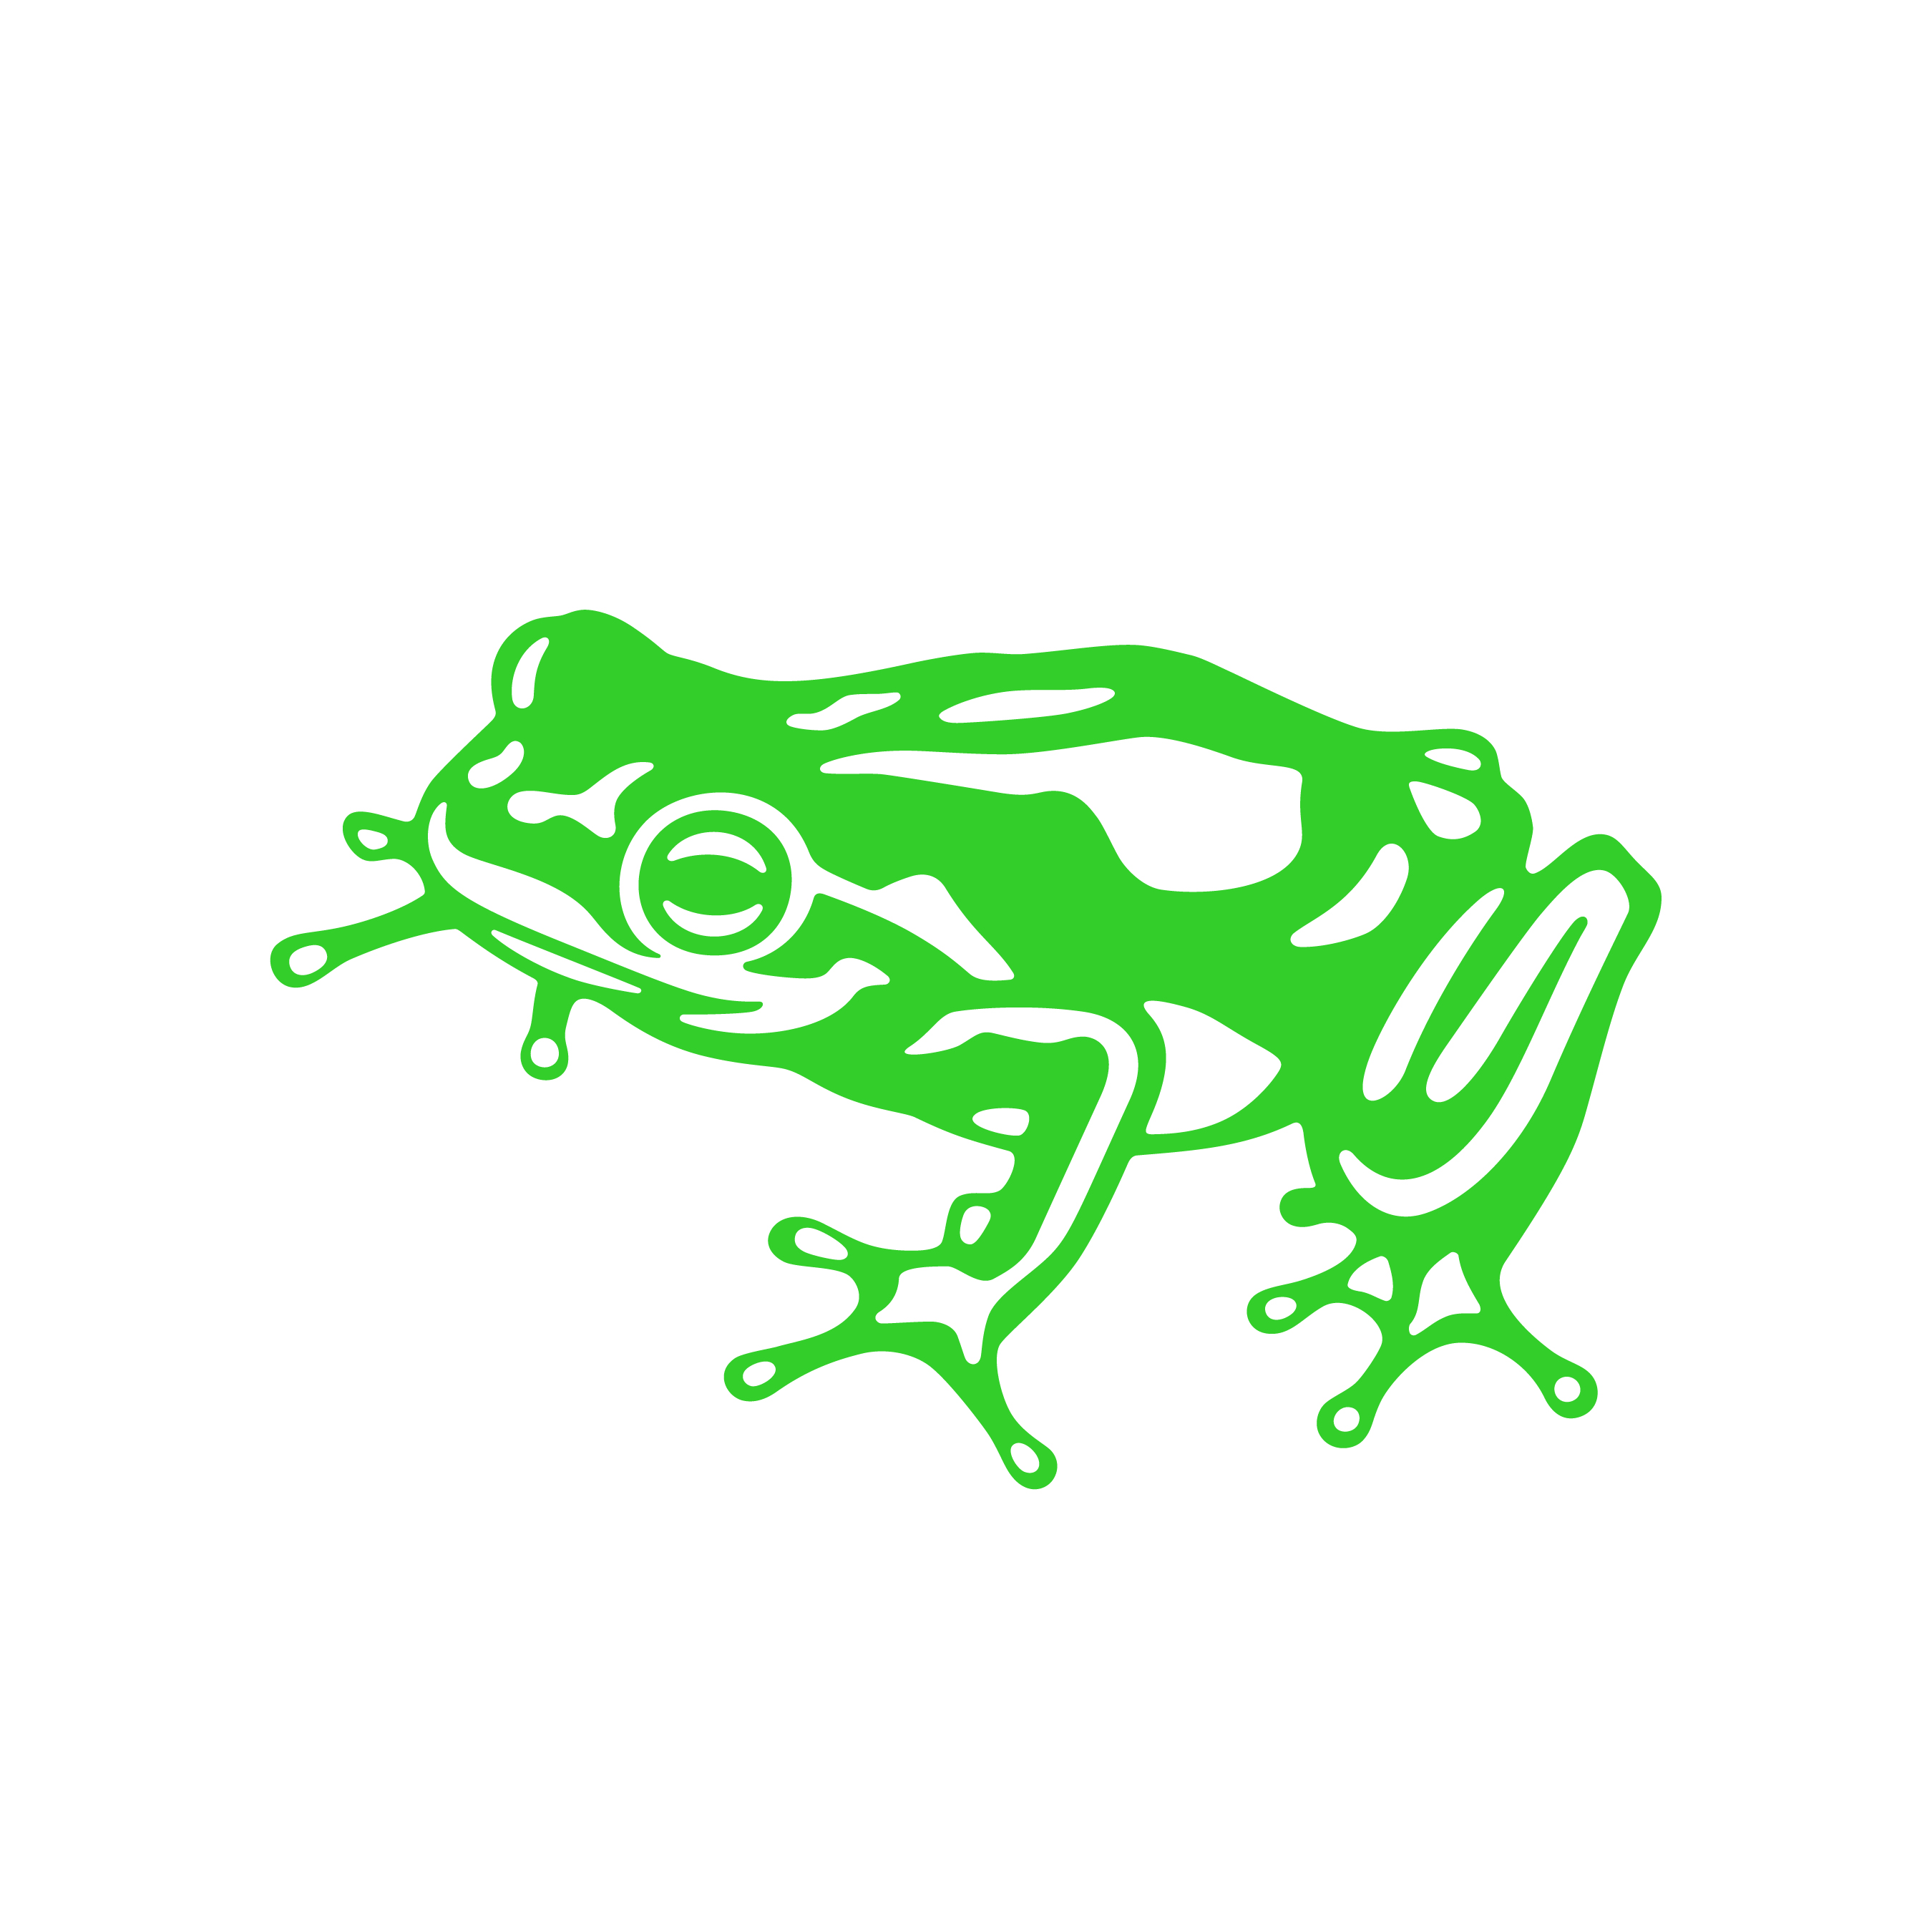 Design jobs at frog